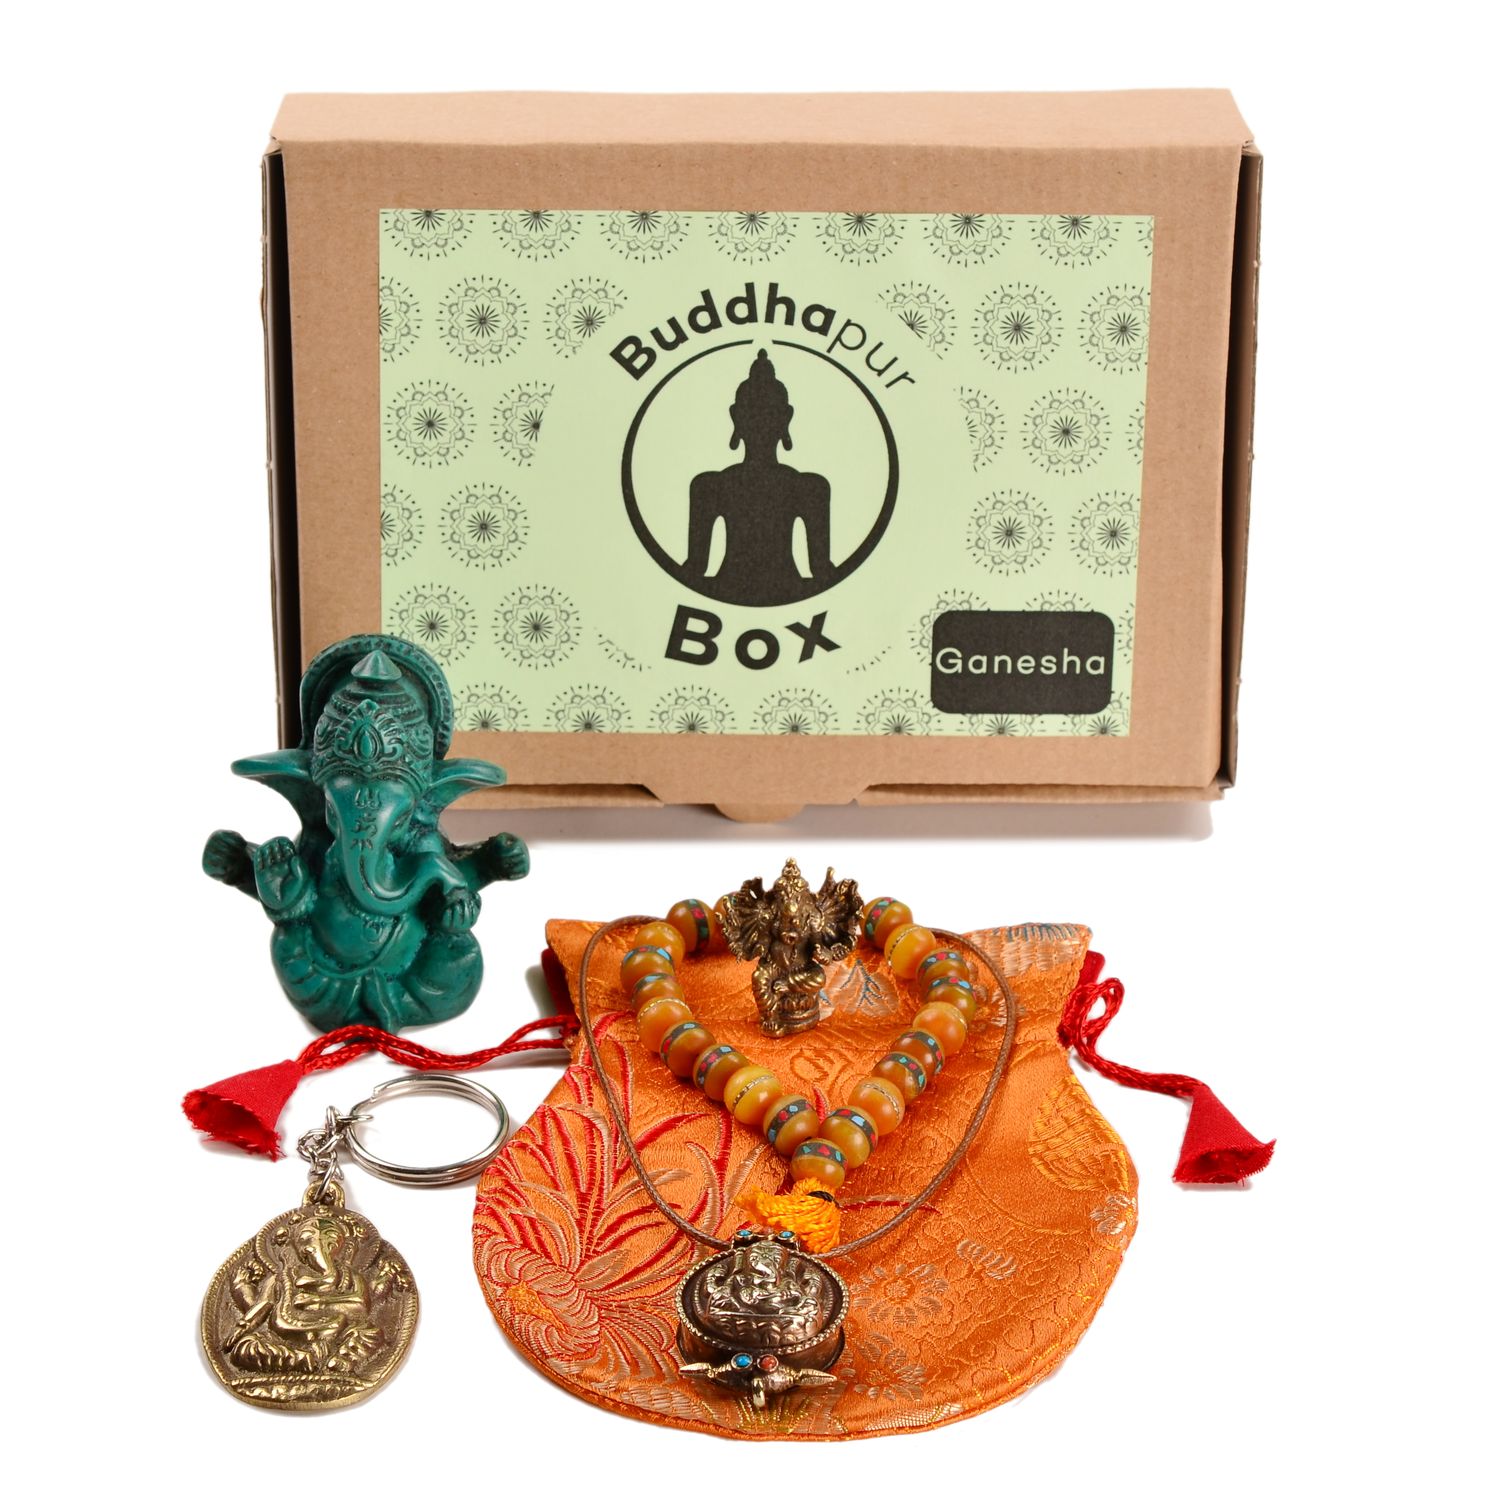 Buddhpur Box Ganesha: Inhlat mit Verpackung